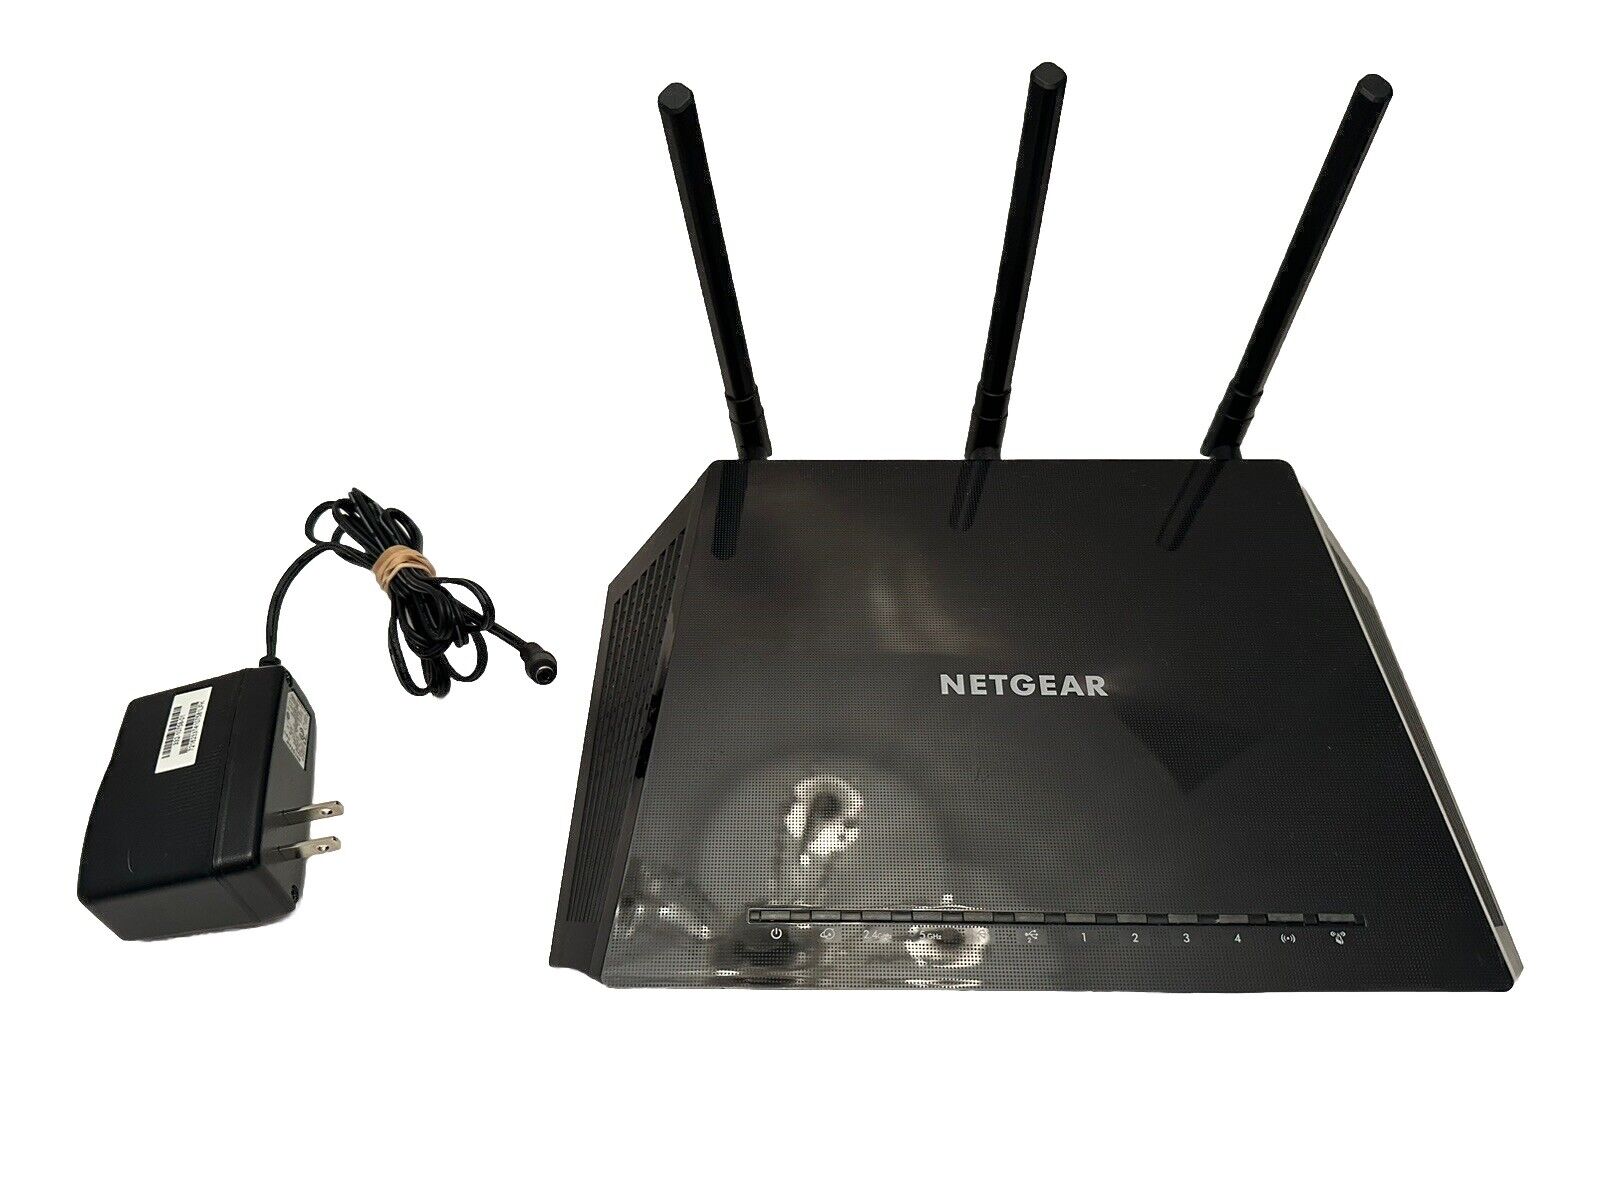 Netgear R6400 AC1750 Smart WiFi Router Dual Band 2.4GHz 5GHz